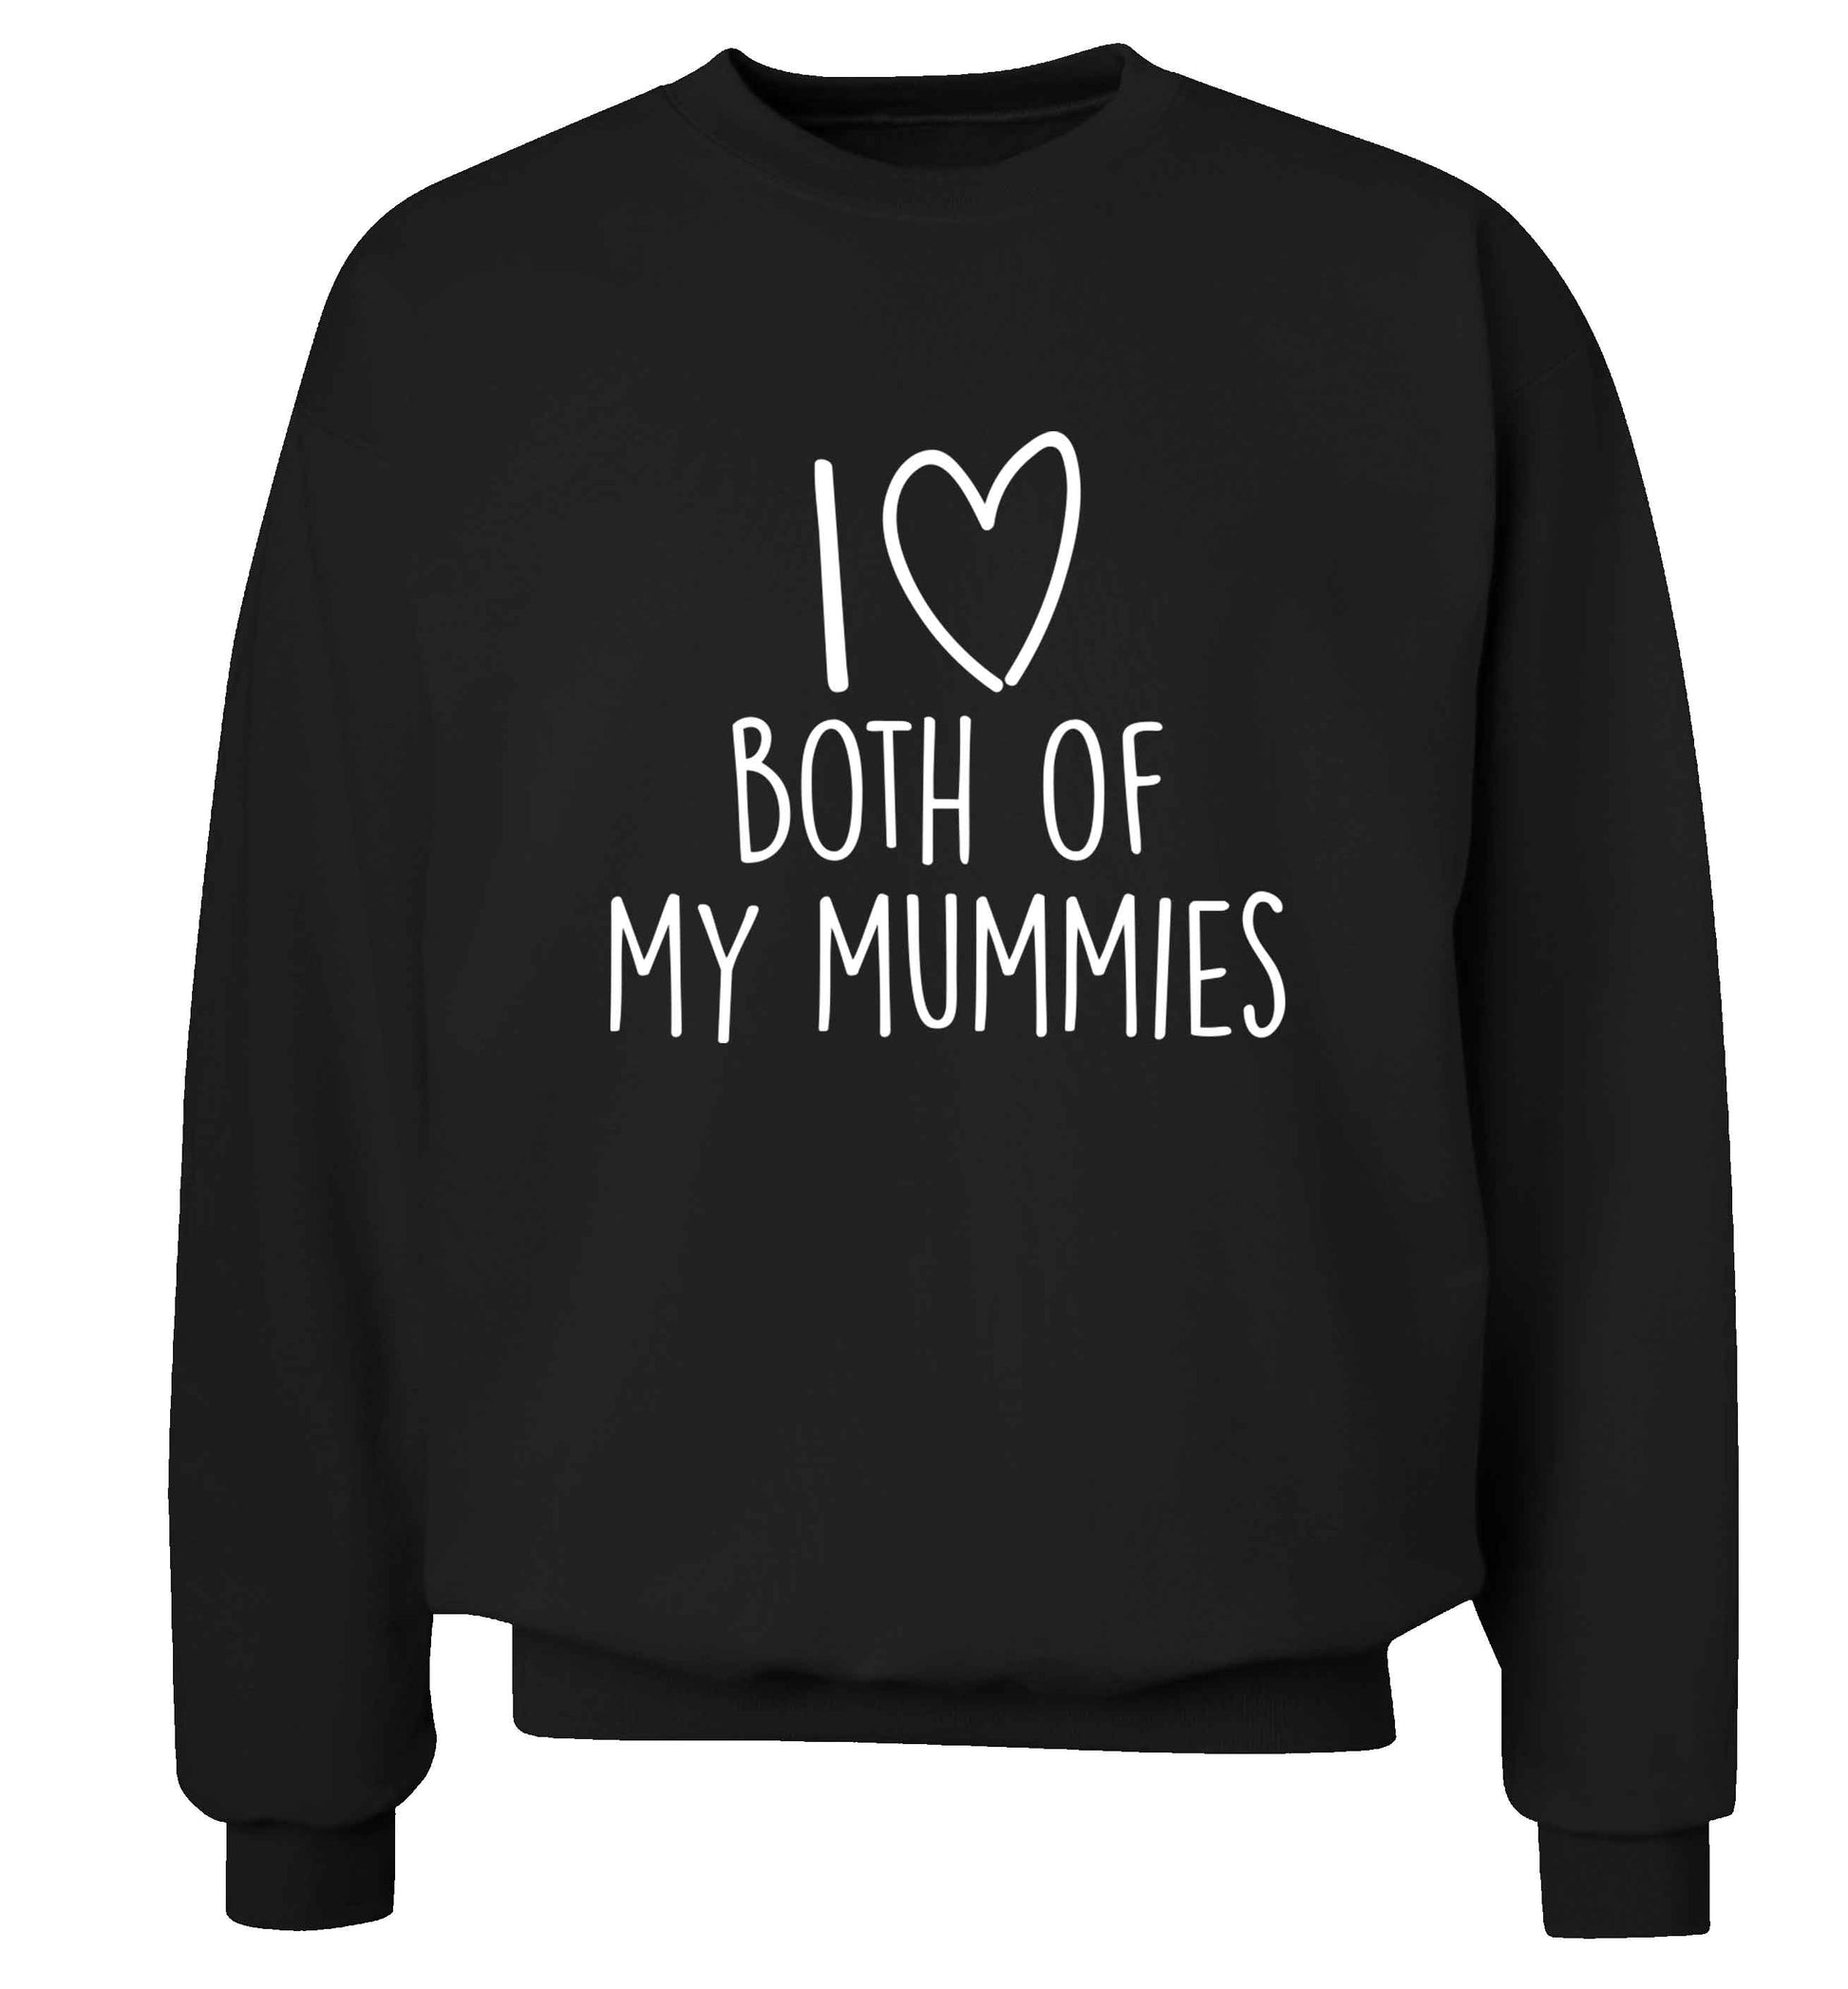 I love both of my mummies adult's unisex black sweater 2XL